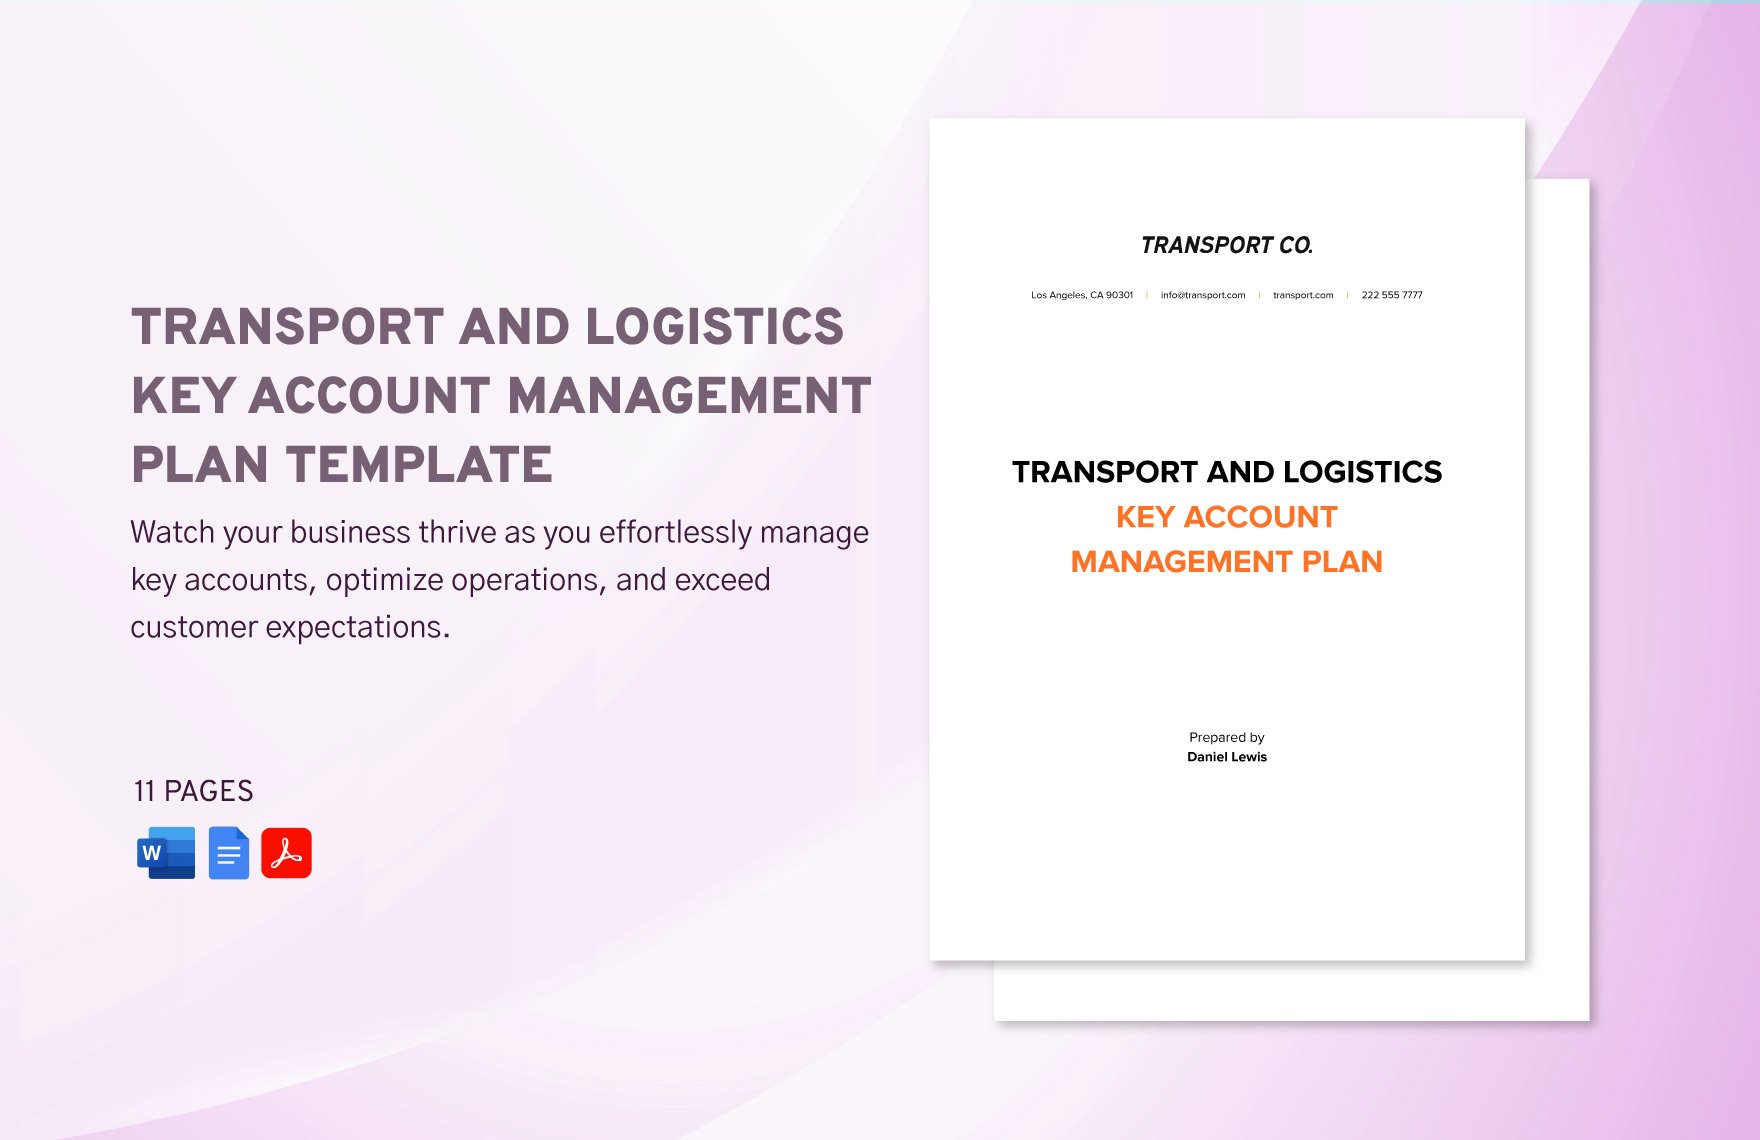 Transport and Logistics Key Account Management Plan Template